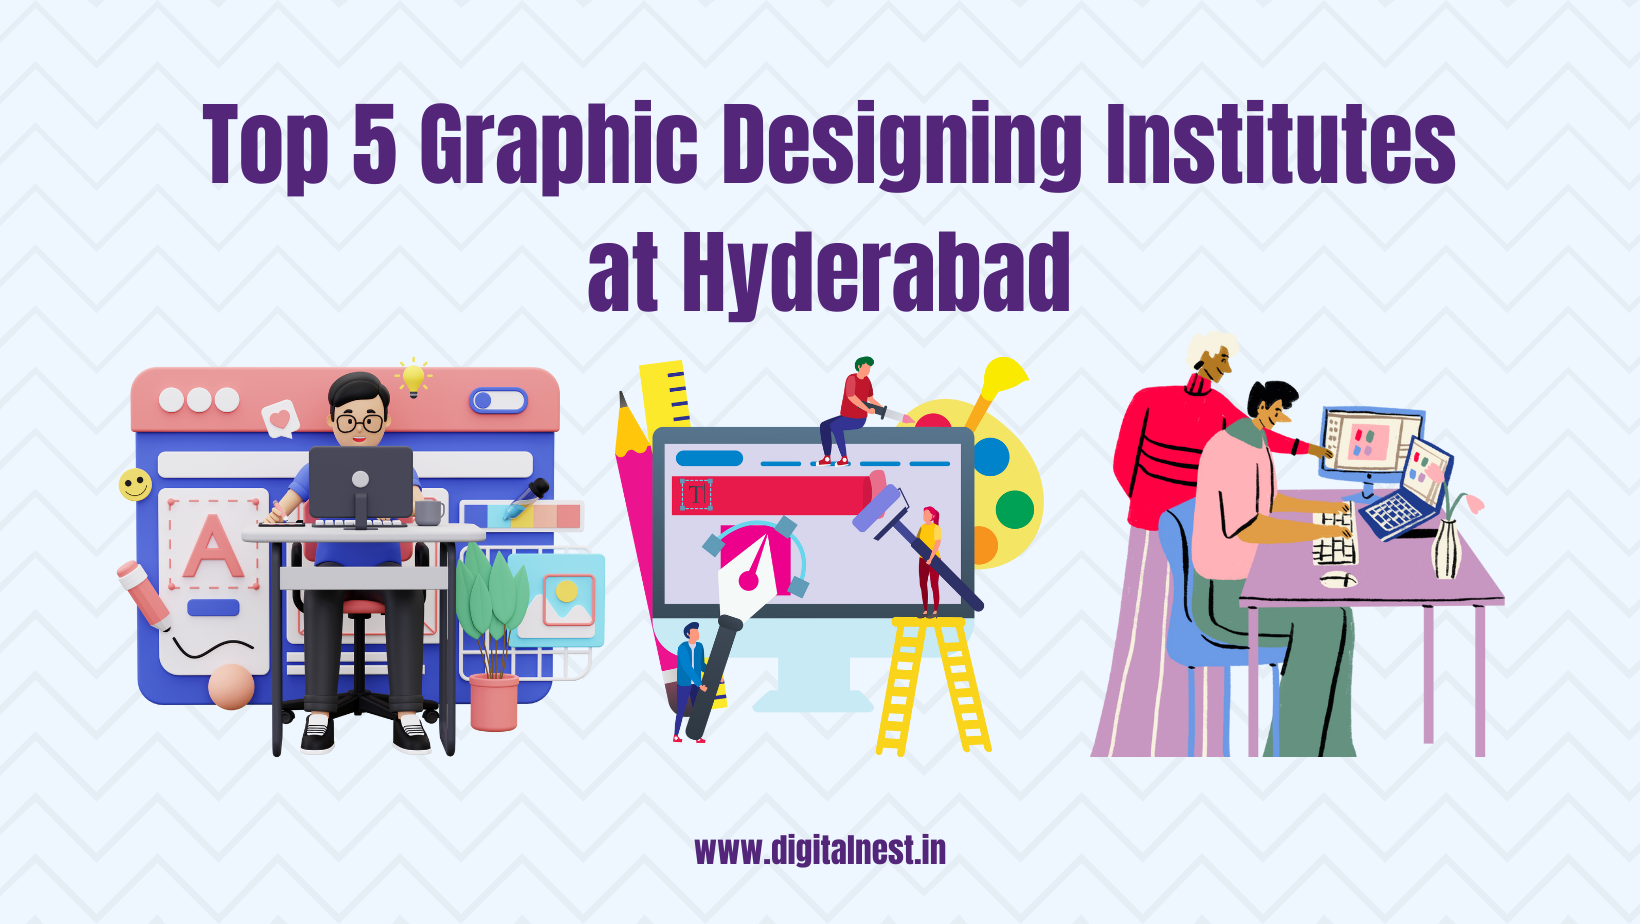 Graphic Design Course in Hyderabad